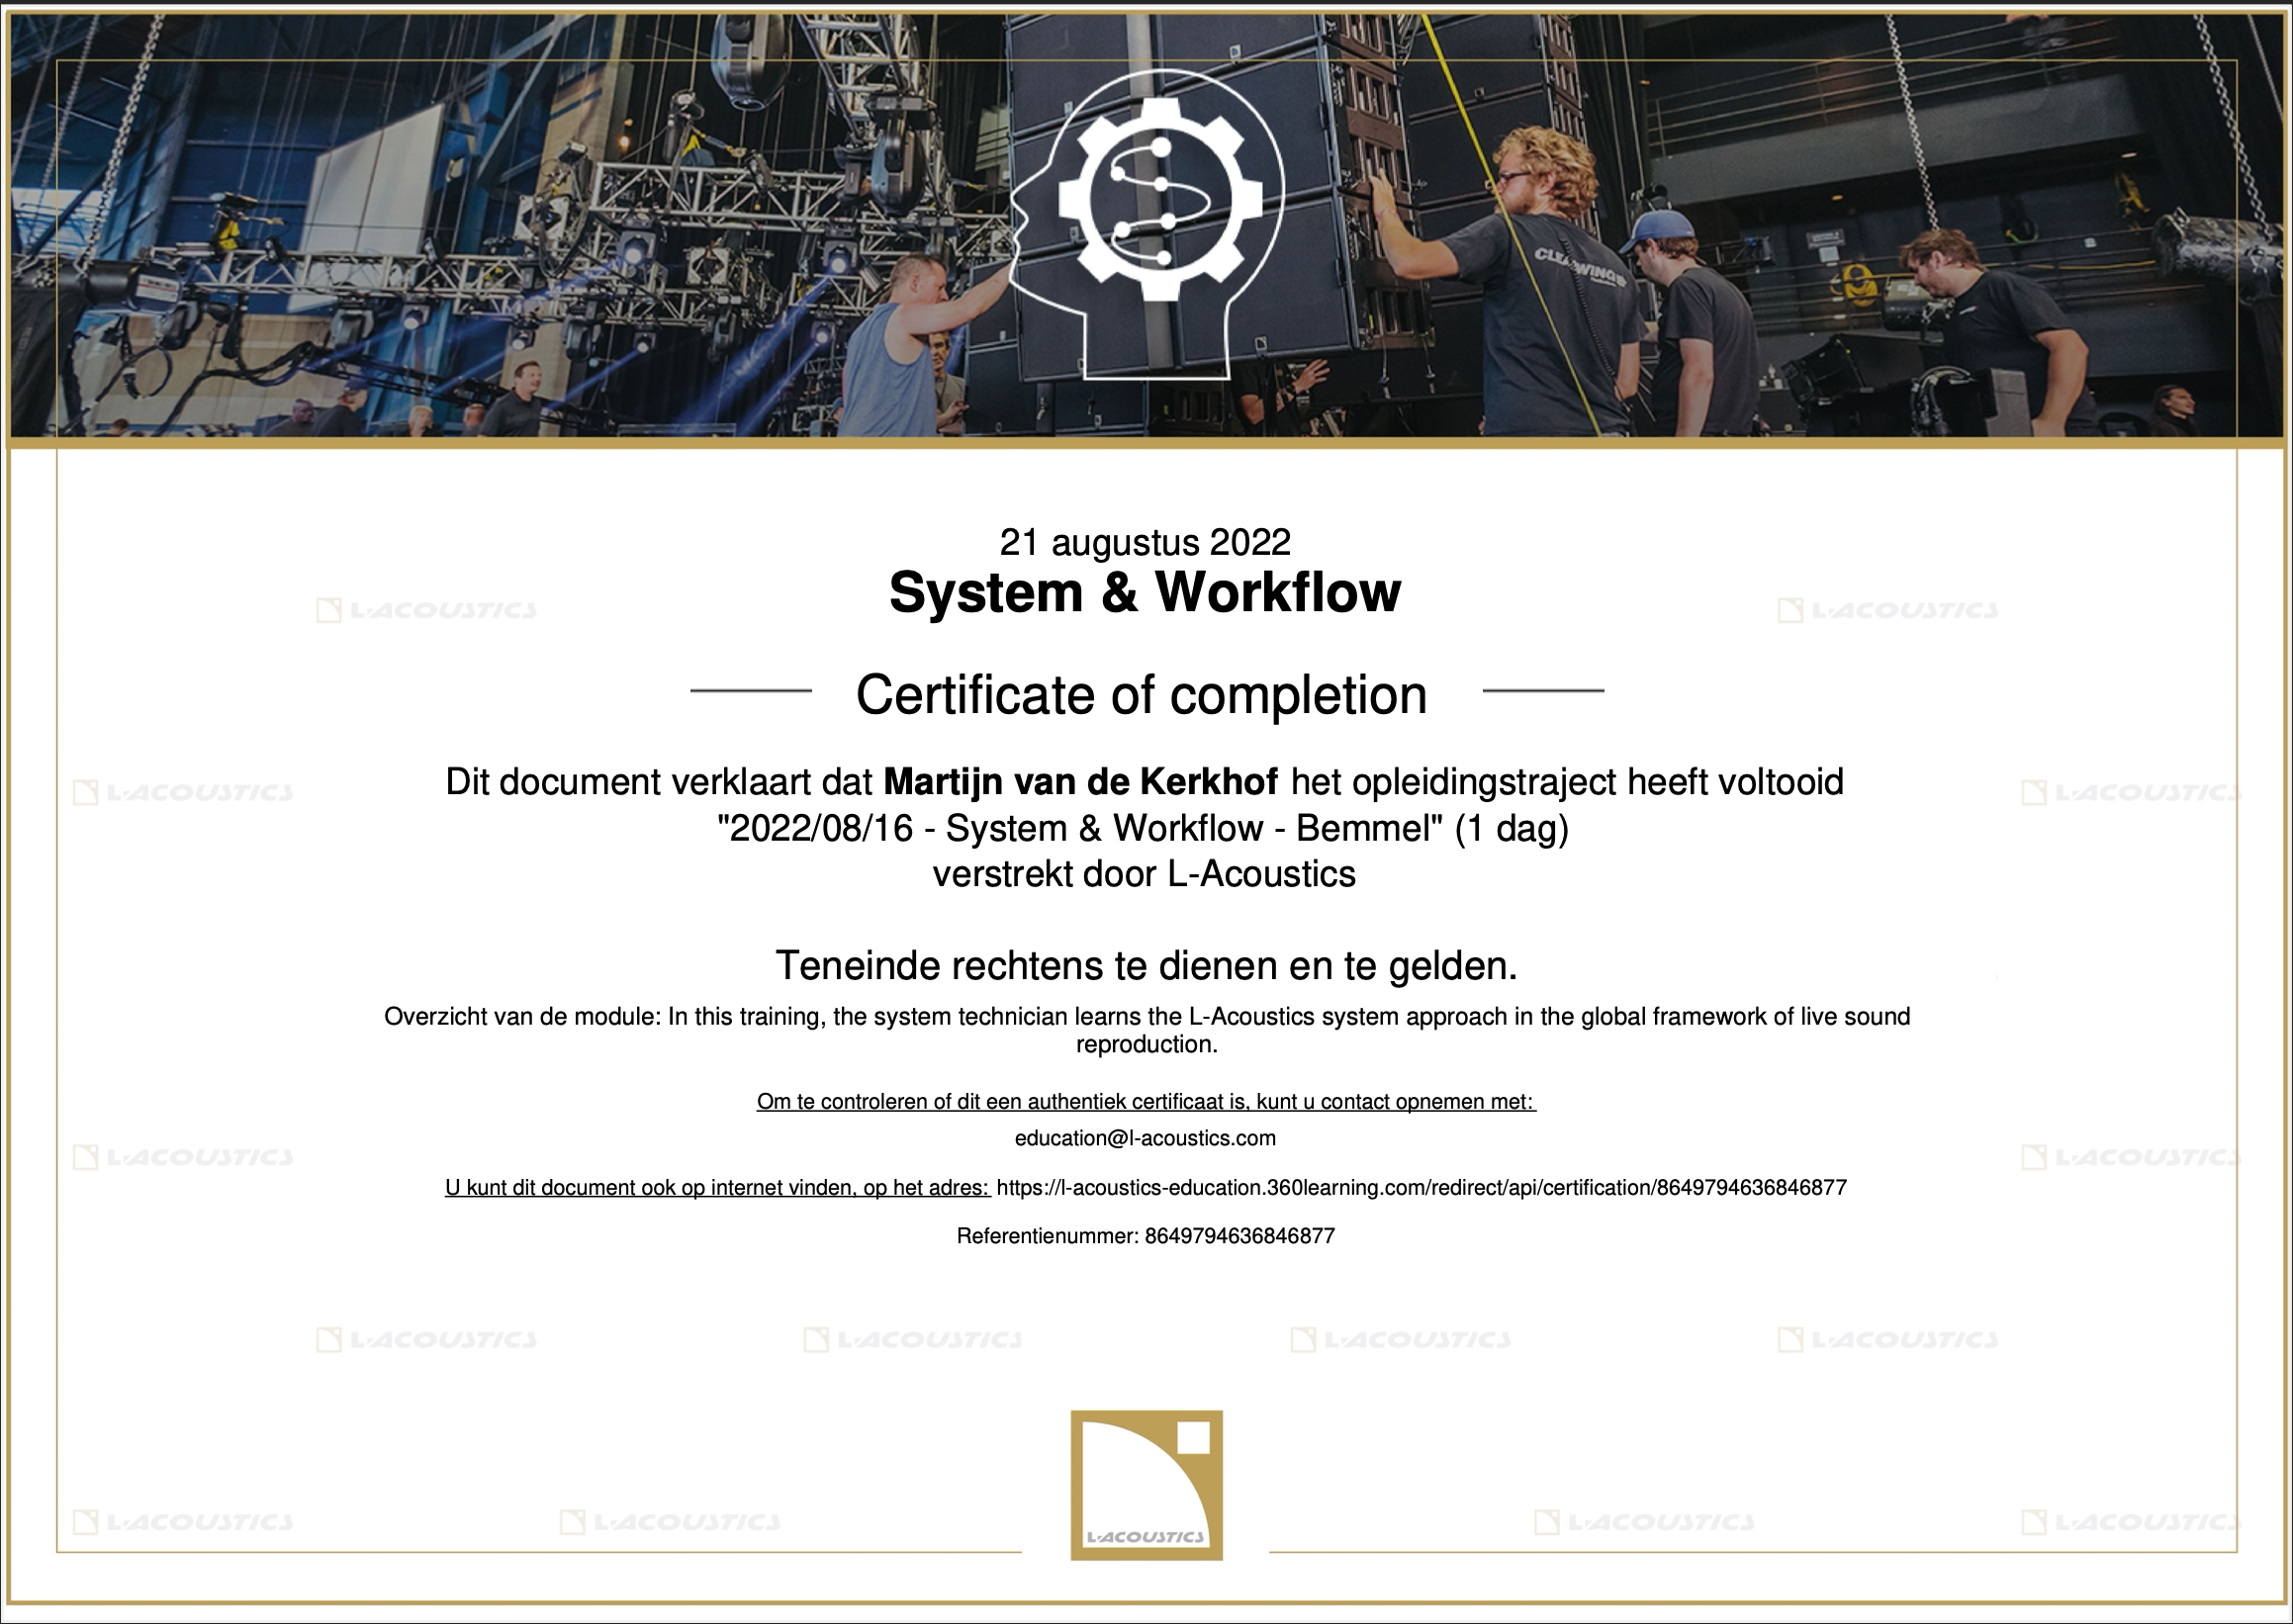 System & Workflow